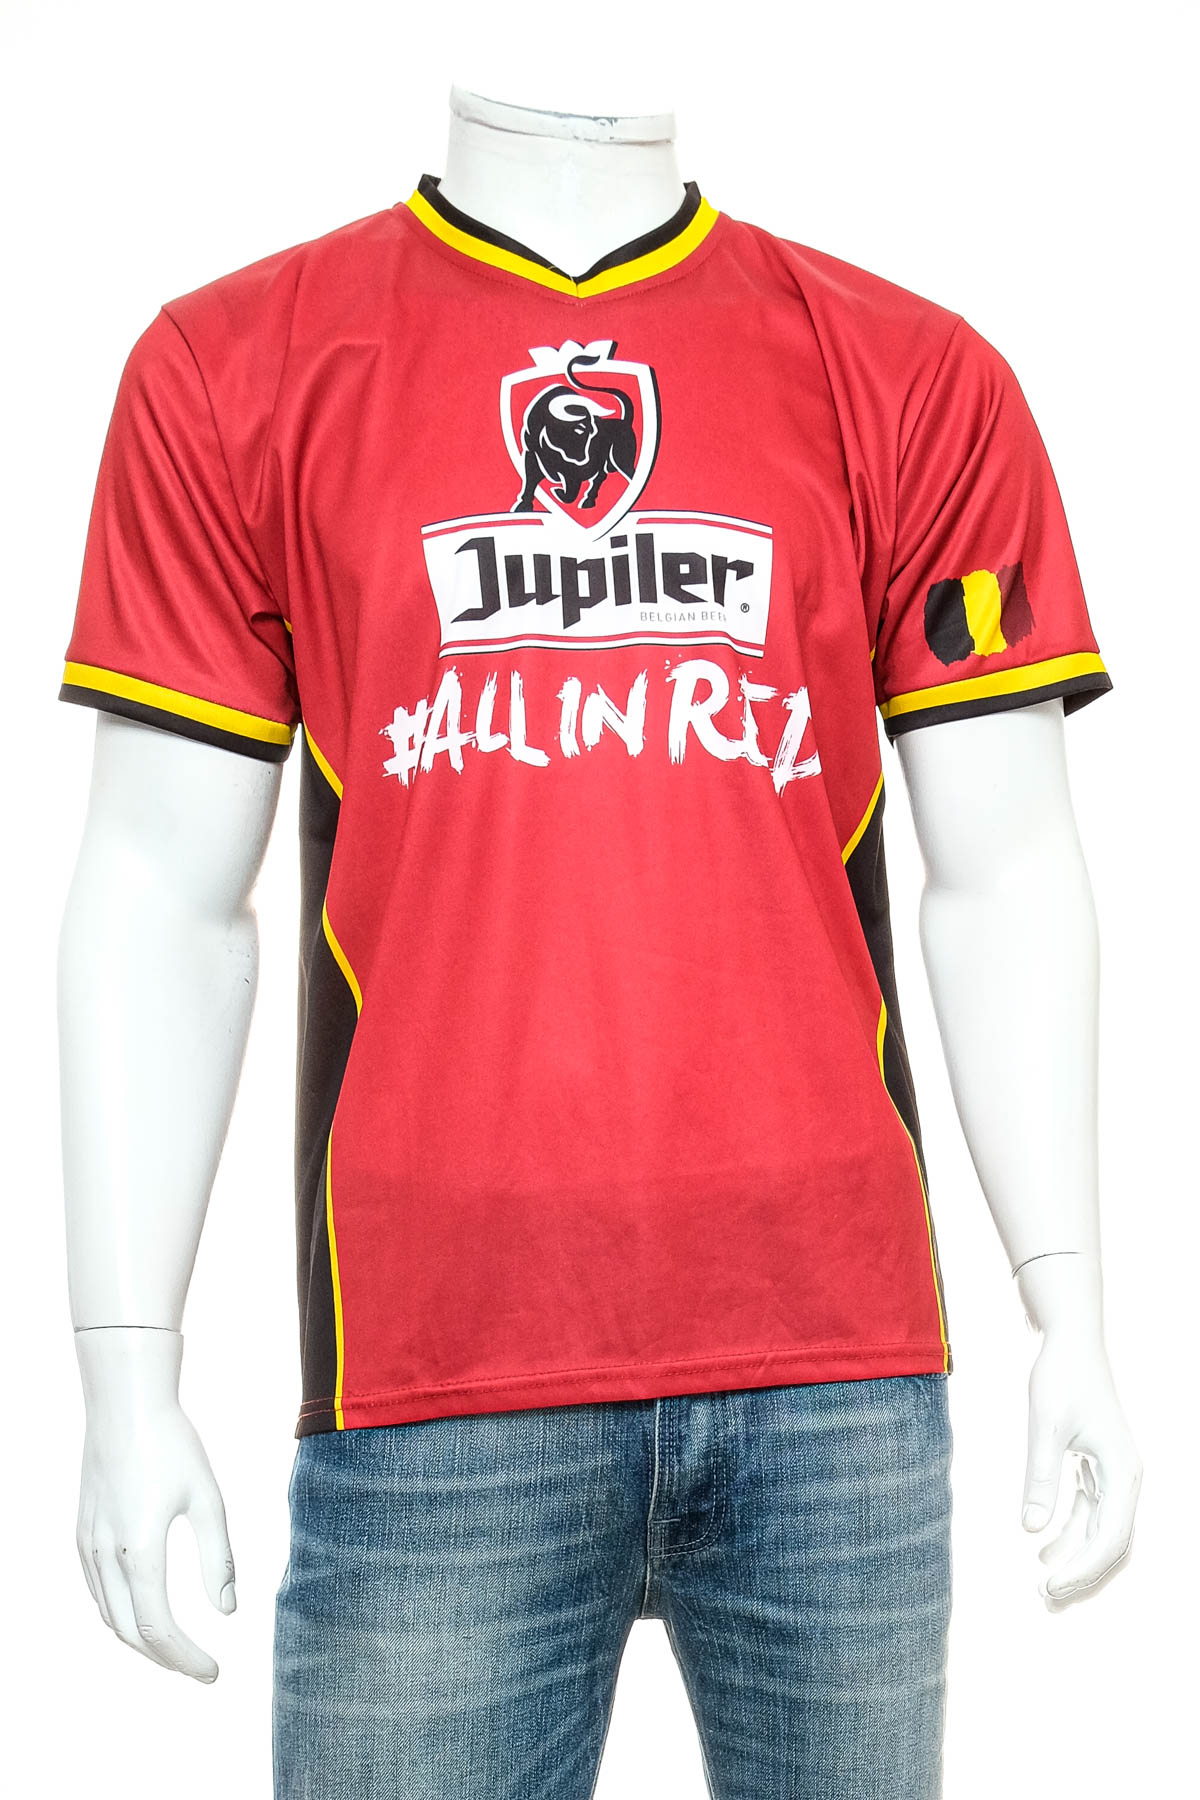 Men's T-shirt - Jupiler - 0